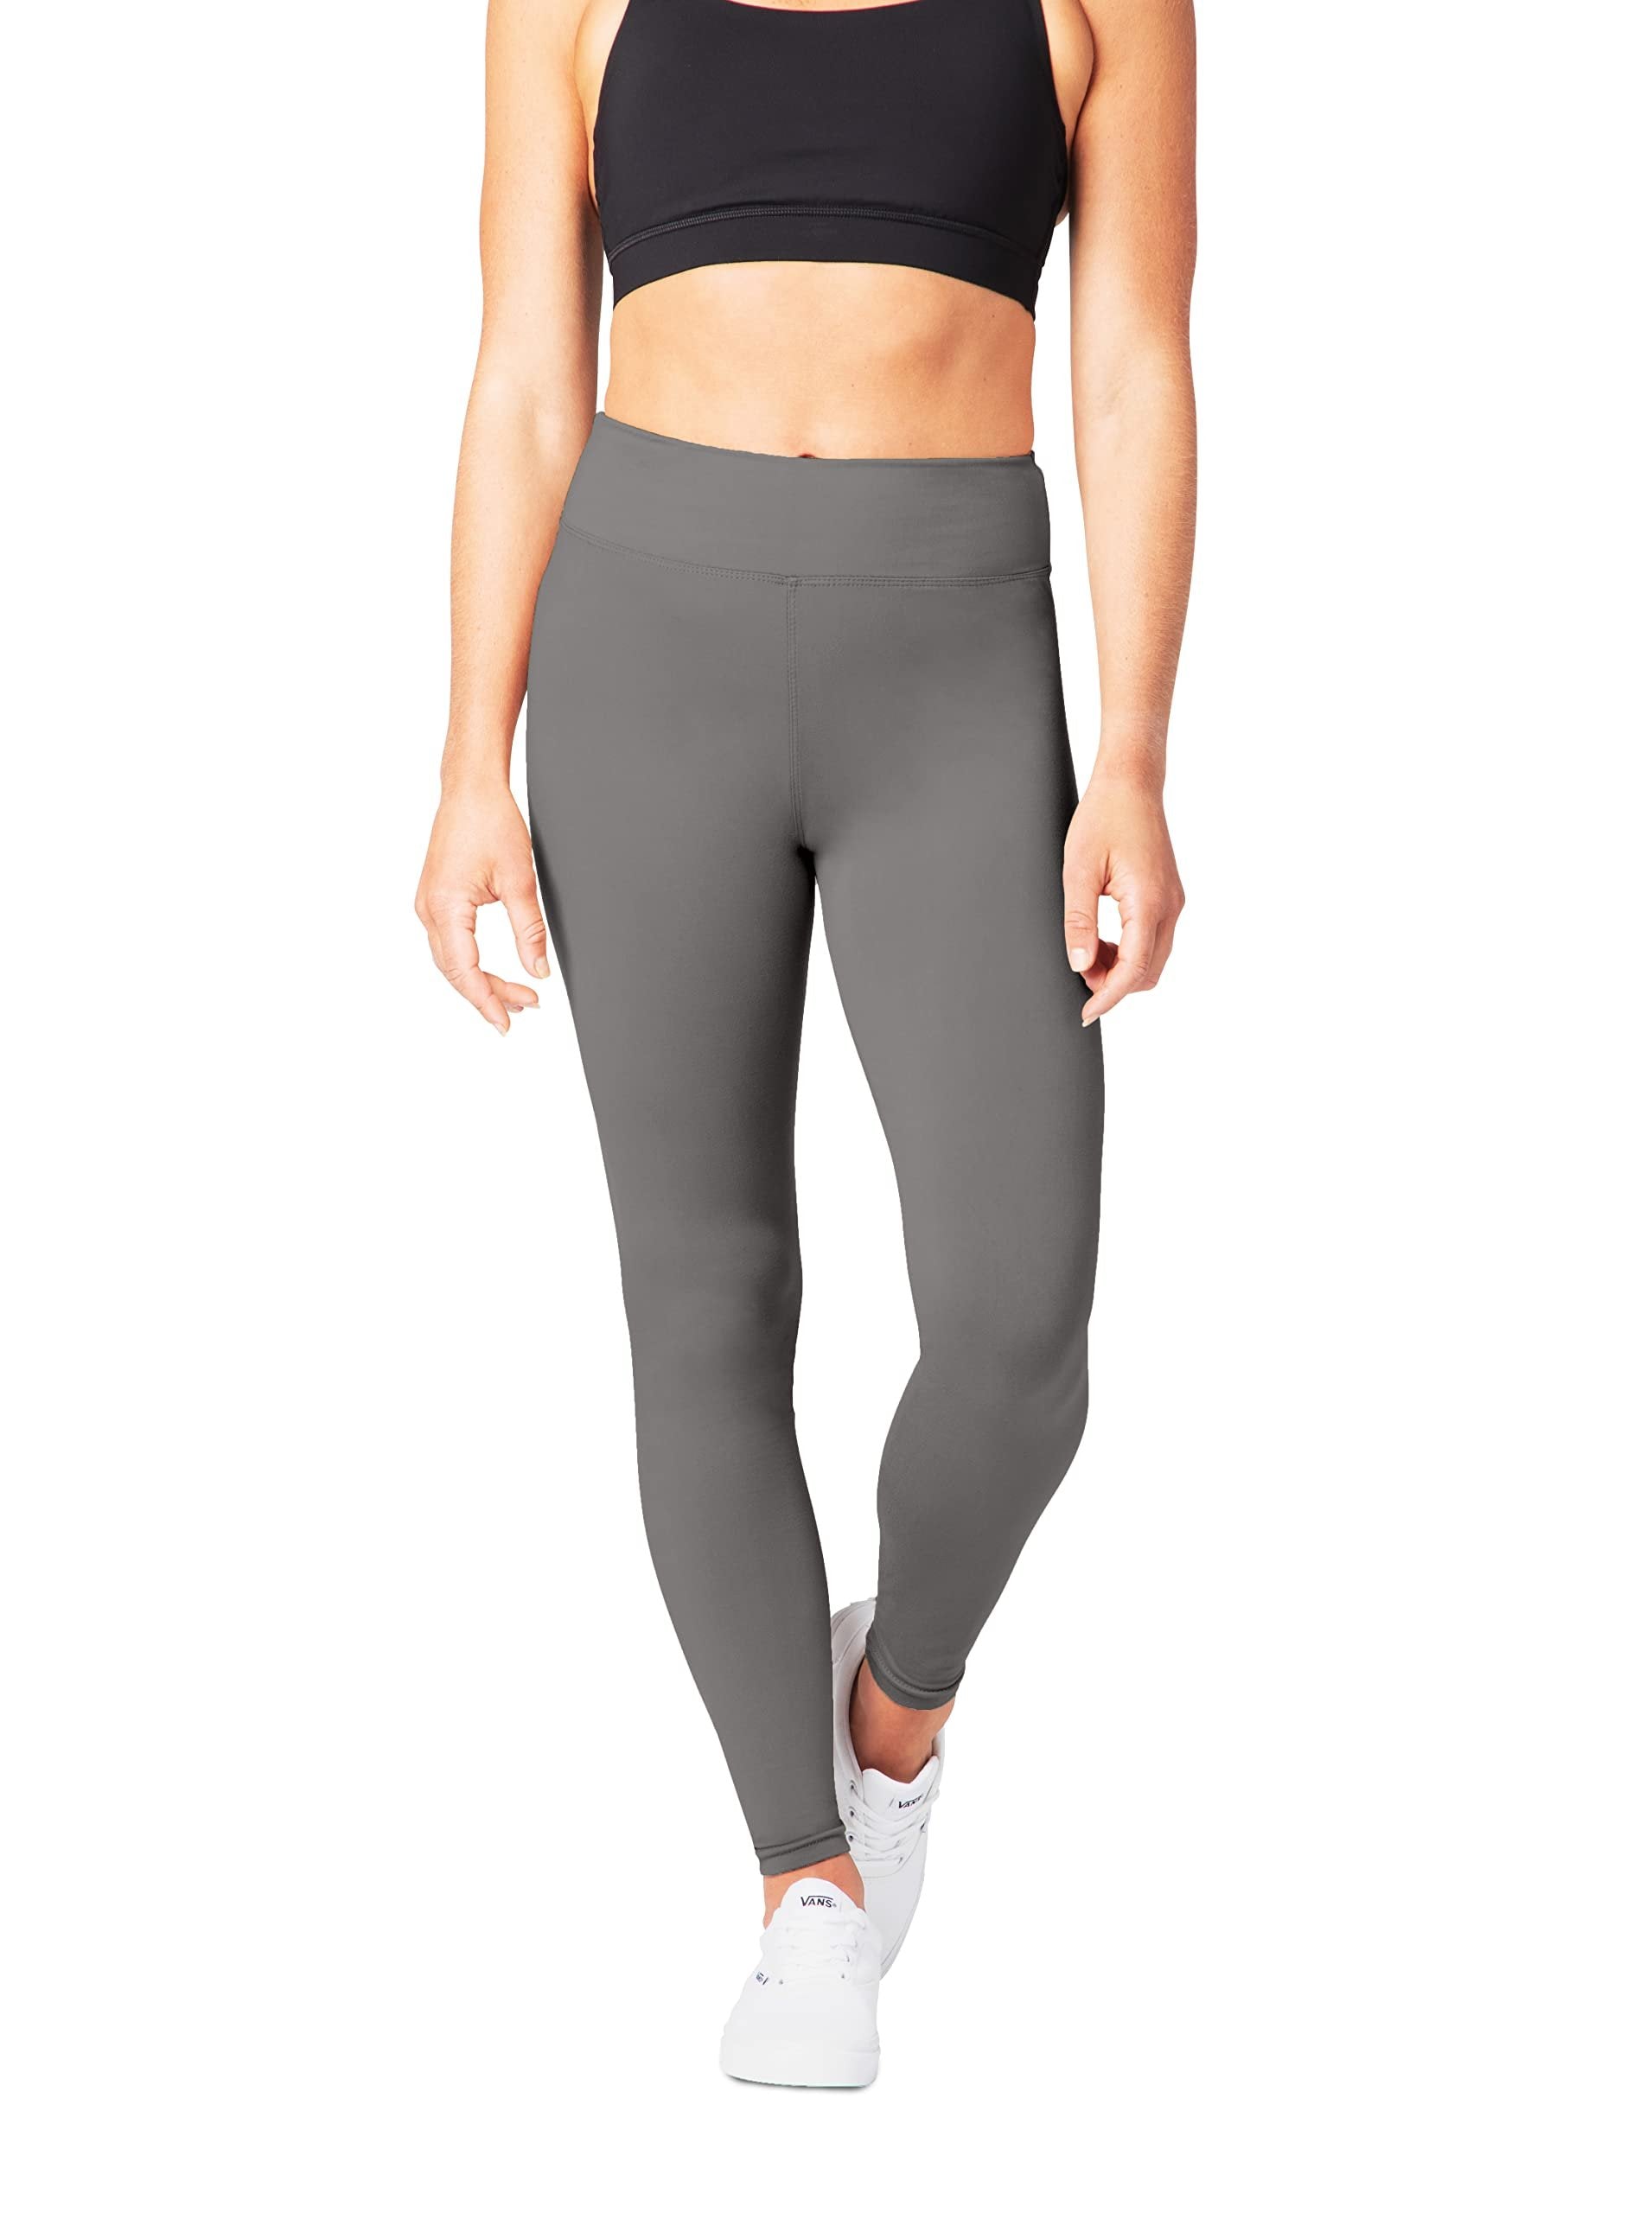 SATINA Gray High Waisted Yoga Pants - Plus & Regular Size, 3 Waistband, Workout Leggings"